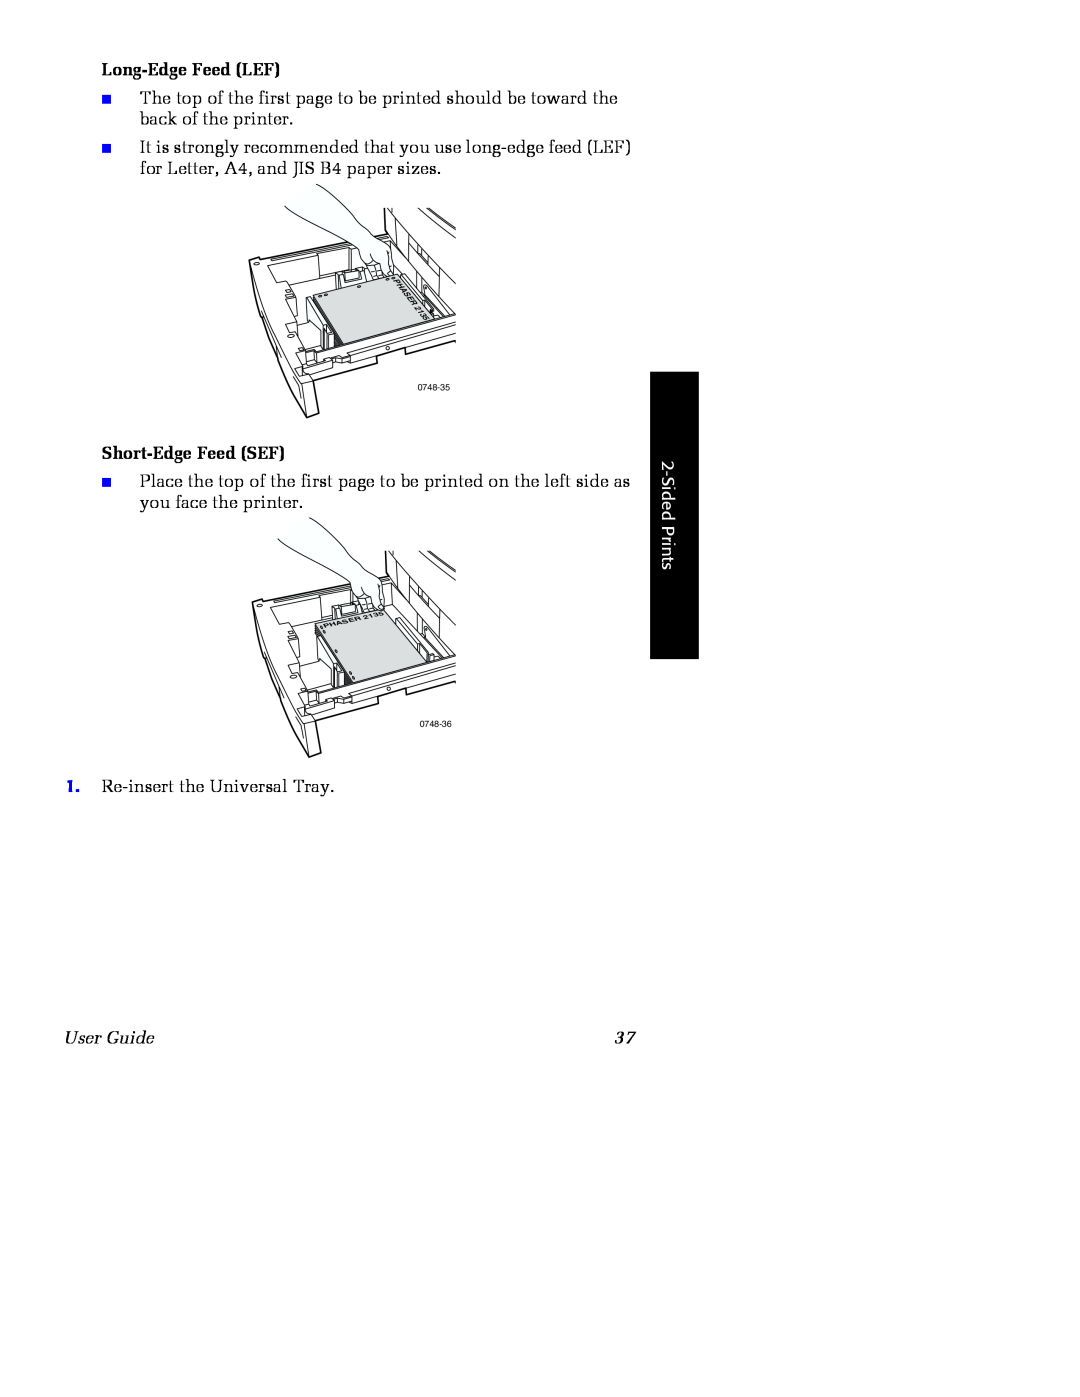 Xerox Phaser 2135 manual Long-Edge Feed LEF, Short-Edge Feed SEF, Sided Prints, User Guide, PH A S ER 2135, R2135 SE A PH 